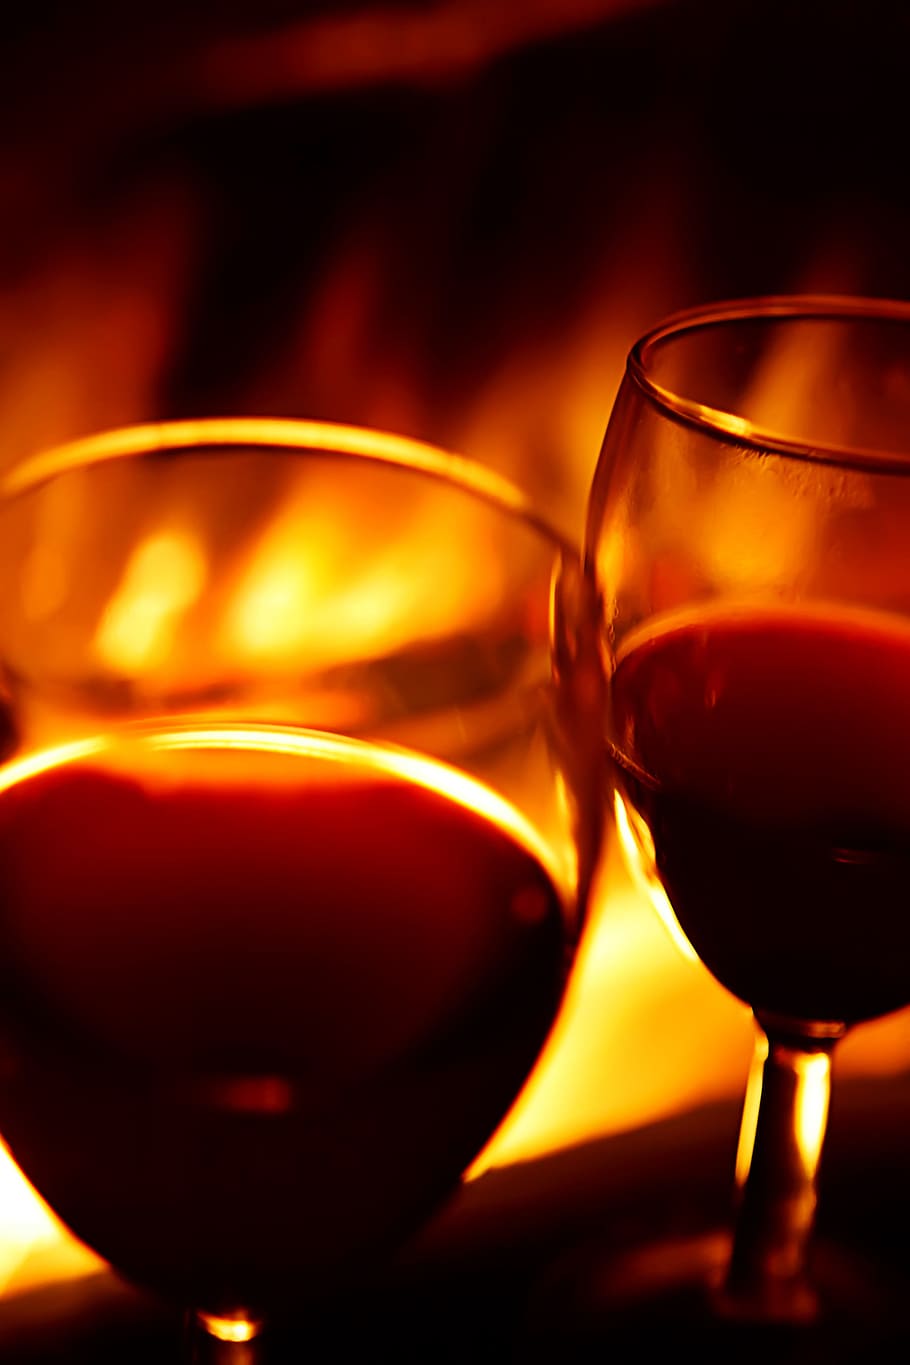 alcohol, beverage, bonfire, burn, celebration, classical, close-up, closeup, cozy, cup